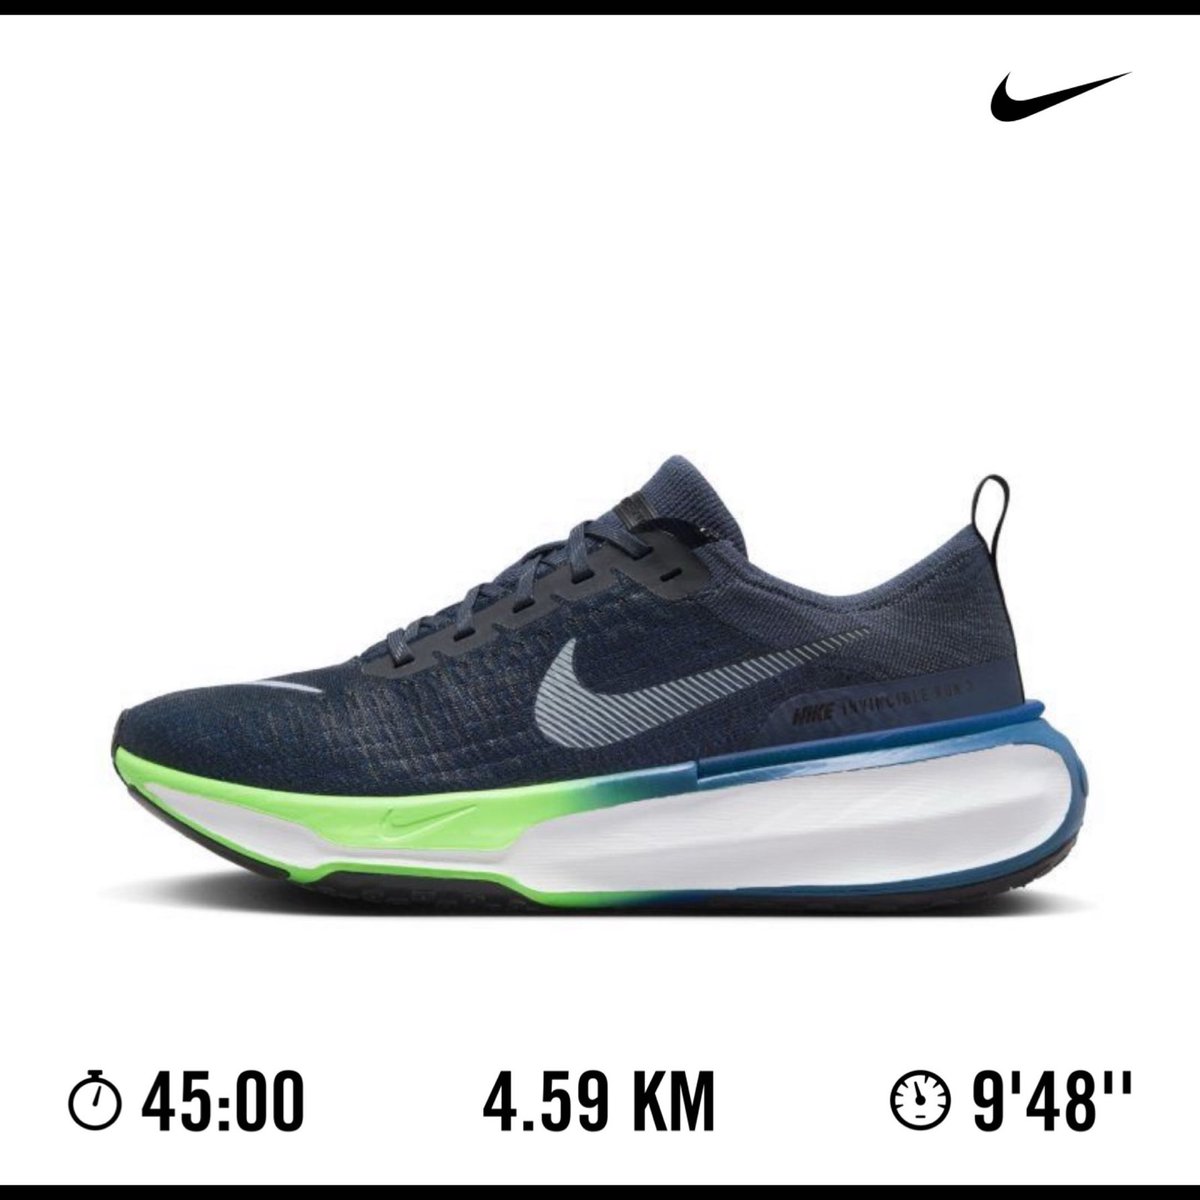 Corrió 4.59 kilómetros con Nike⁠ Run Club #Jogging #Nike #AppleWatchUltra #Fitsi #Running #PowerBeatsPro #NikeRunning #AppleMusic #Fitness #JustDoIt #Gym #NikeRunClub #Health  Empezando la semana con actitud Starting the week with attitude